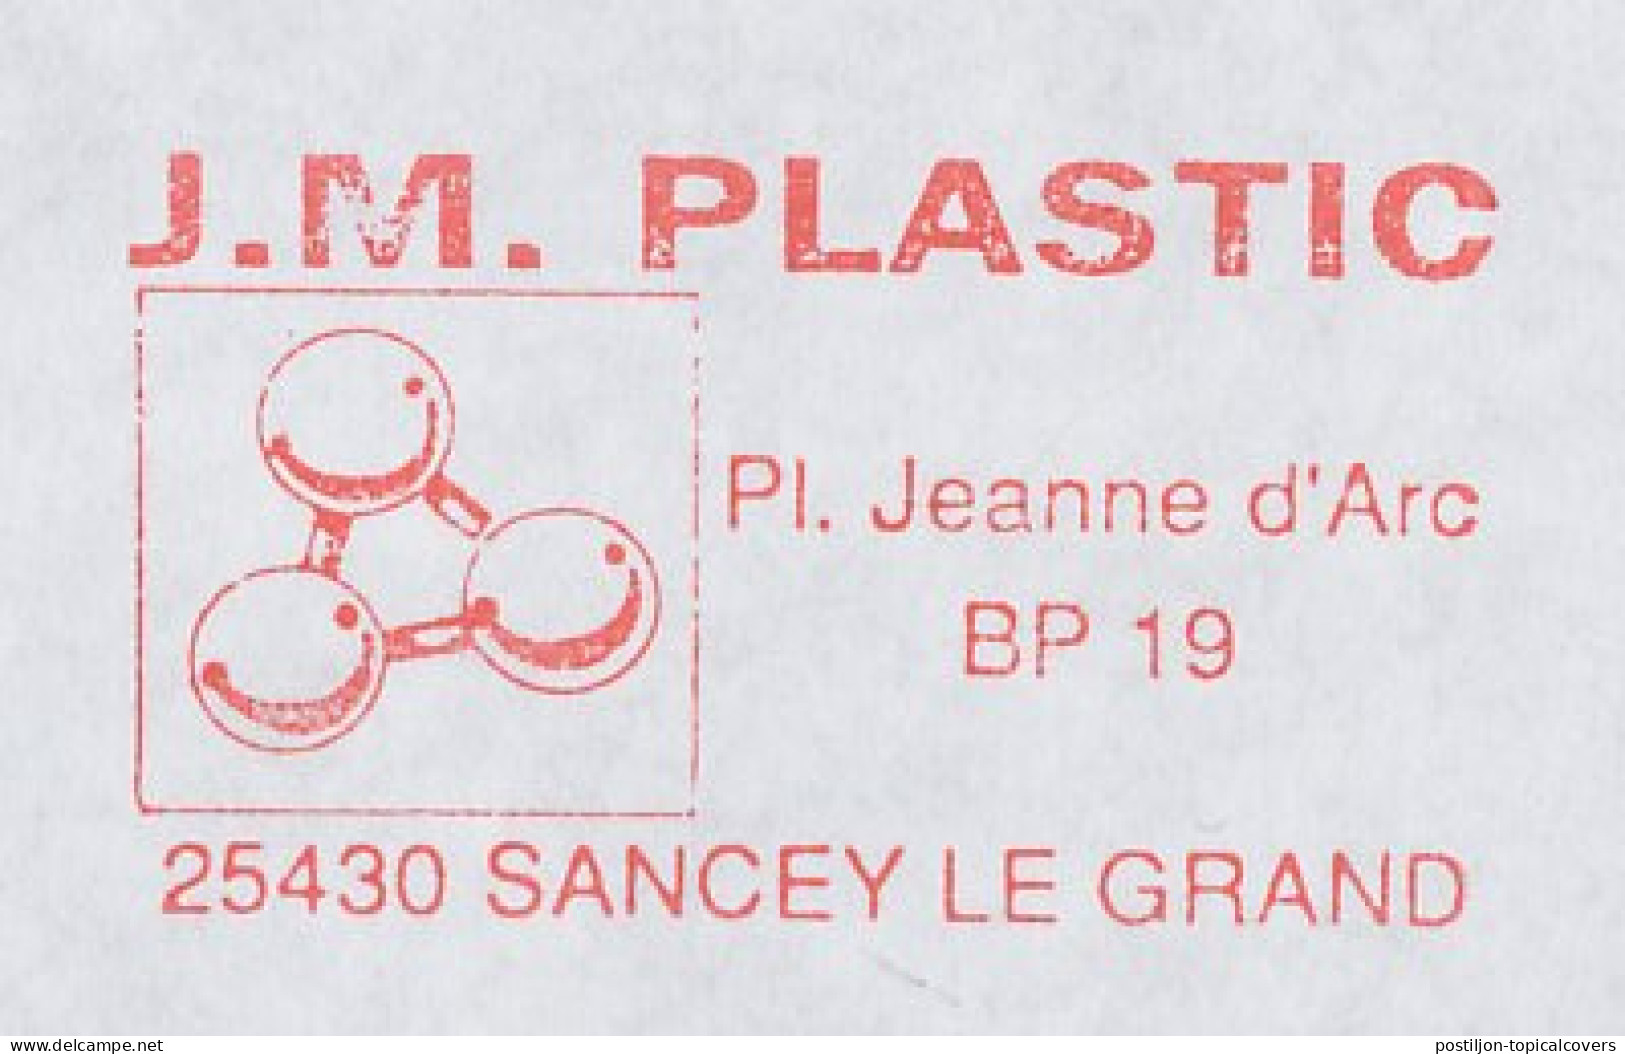 Meter Cover France 2002 Atoms - Plastic - Chemie